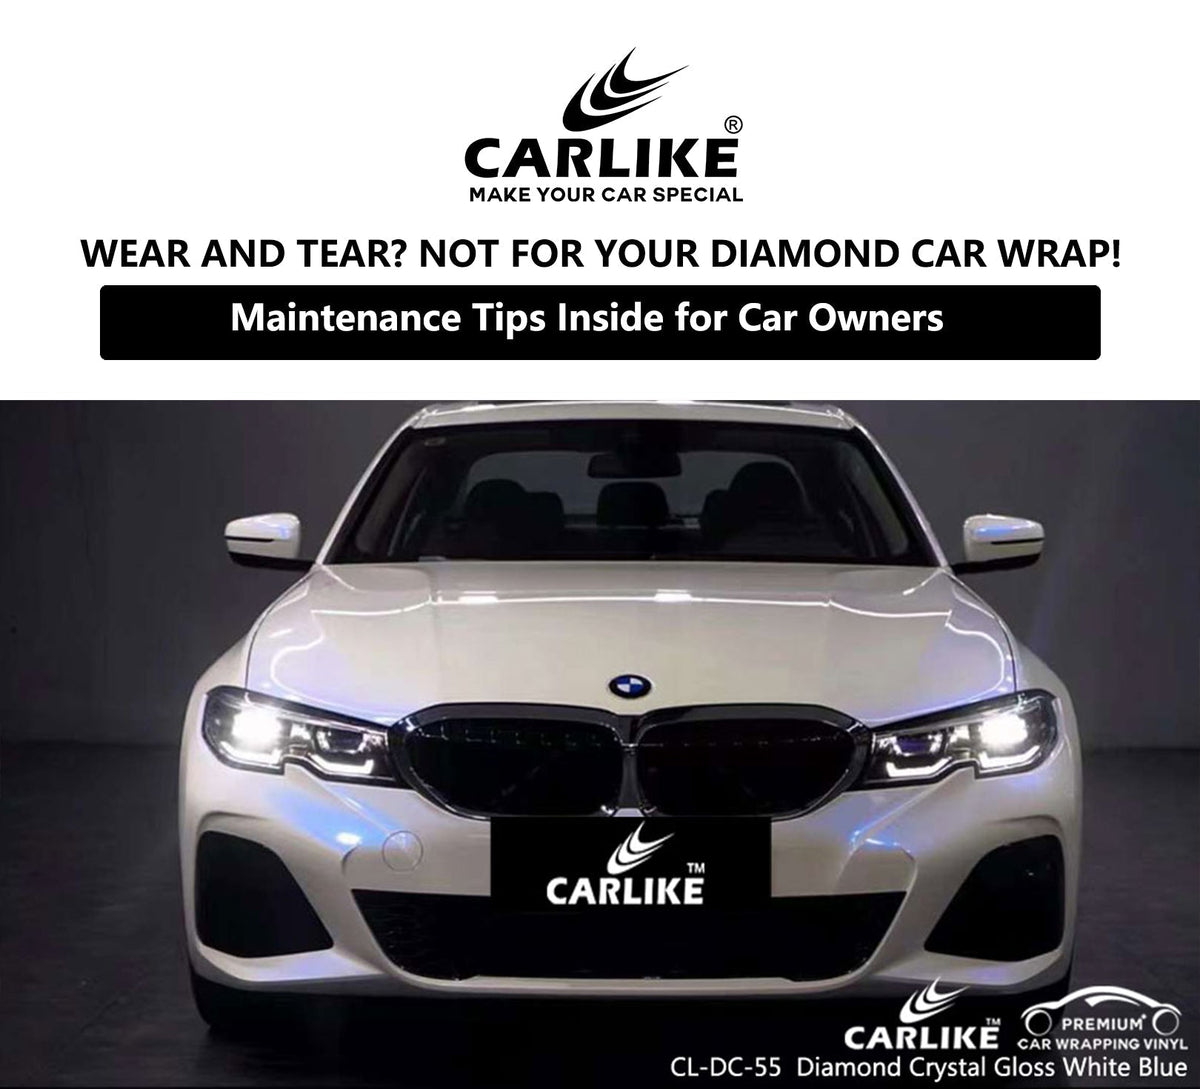 Super Glitter Diamond Stone Gold Vinyl Wrap Car Supplier – CARLIKE WRAP